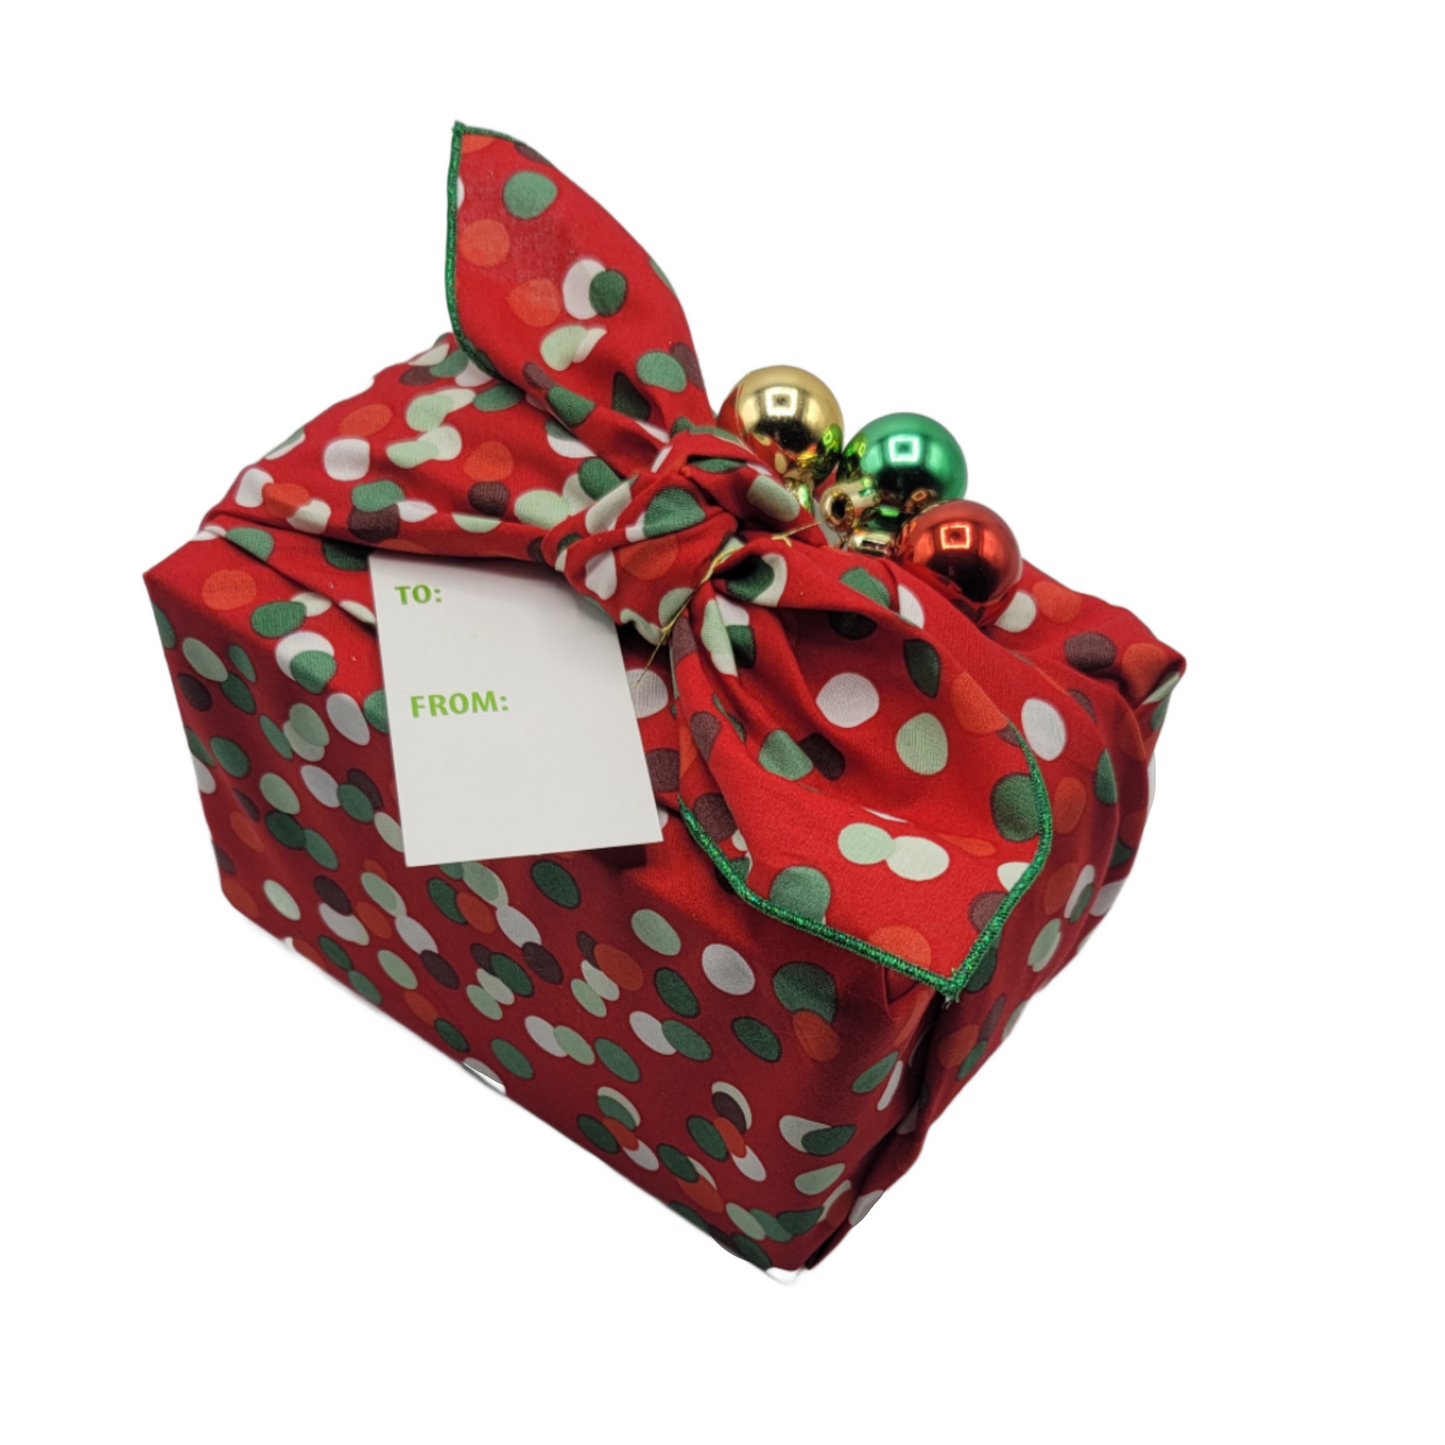 Furoshiki 3 pc Fabric Gift Wrap Kit - Holiday/Multi Novelty Dots on Red